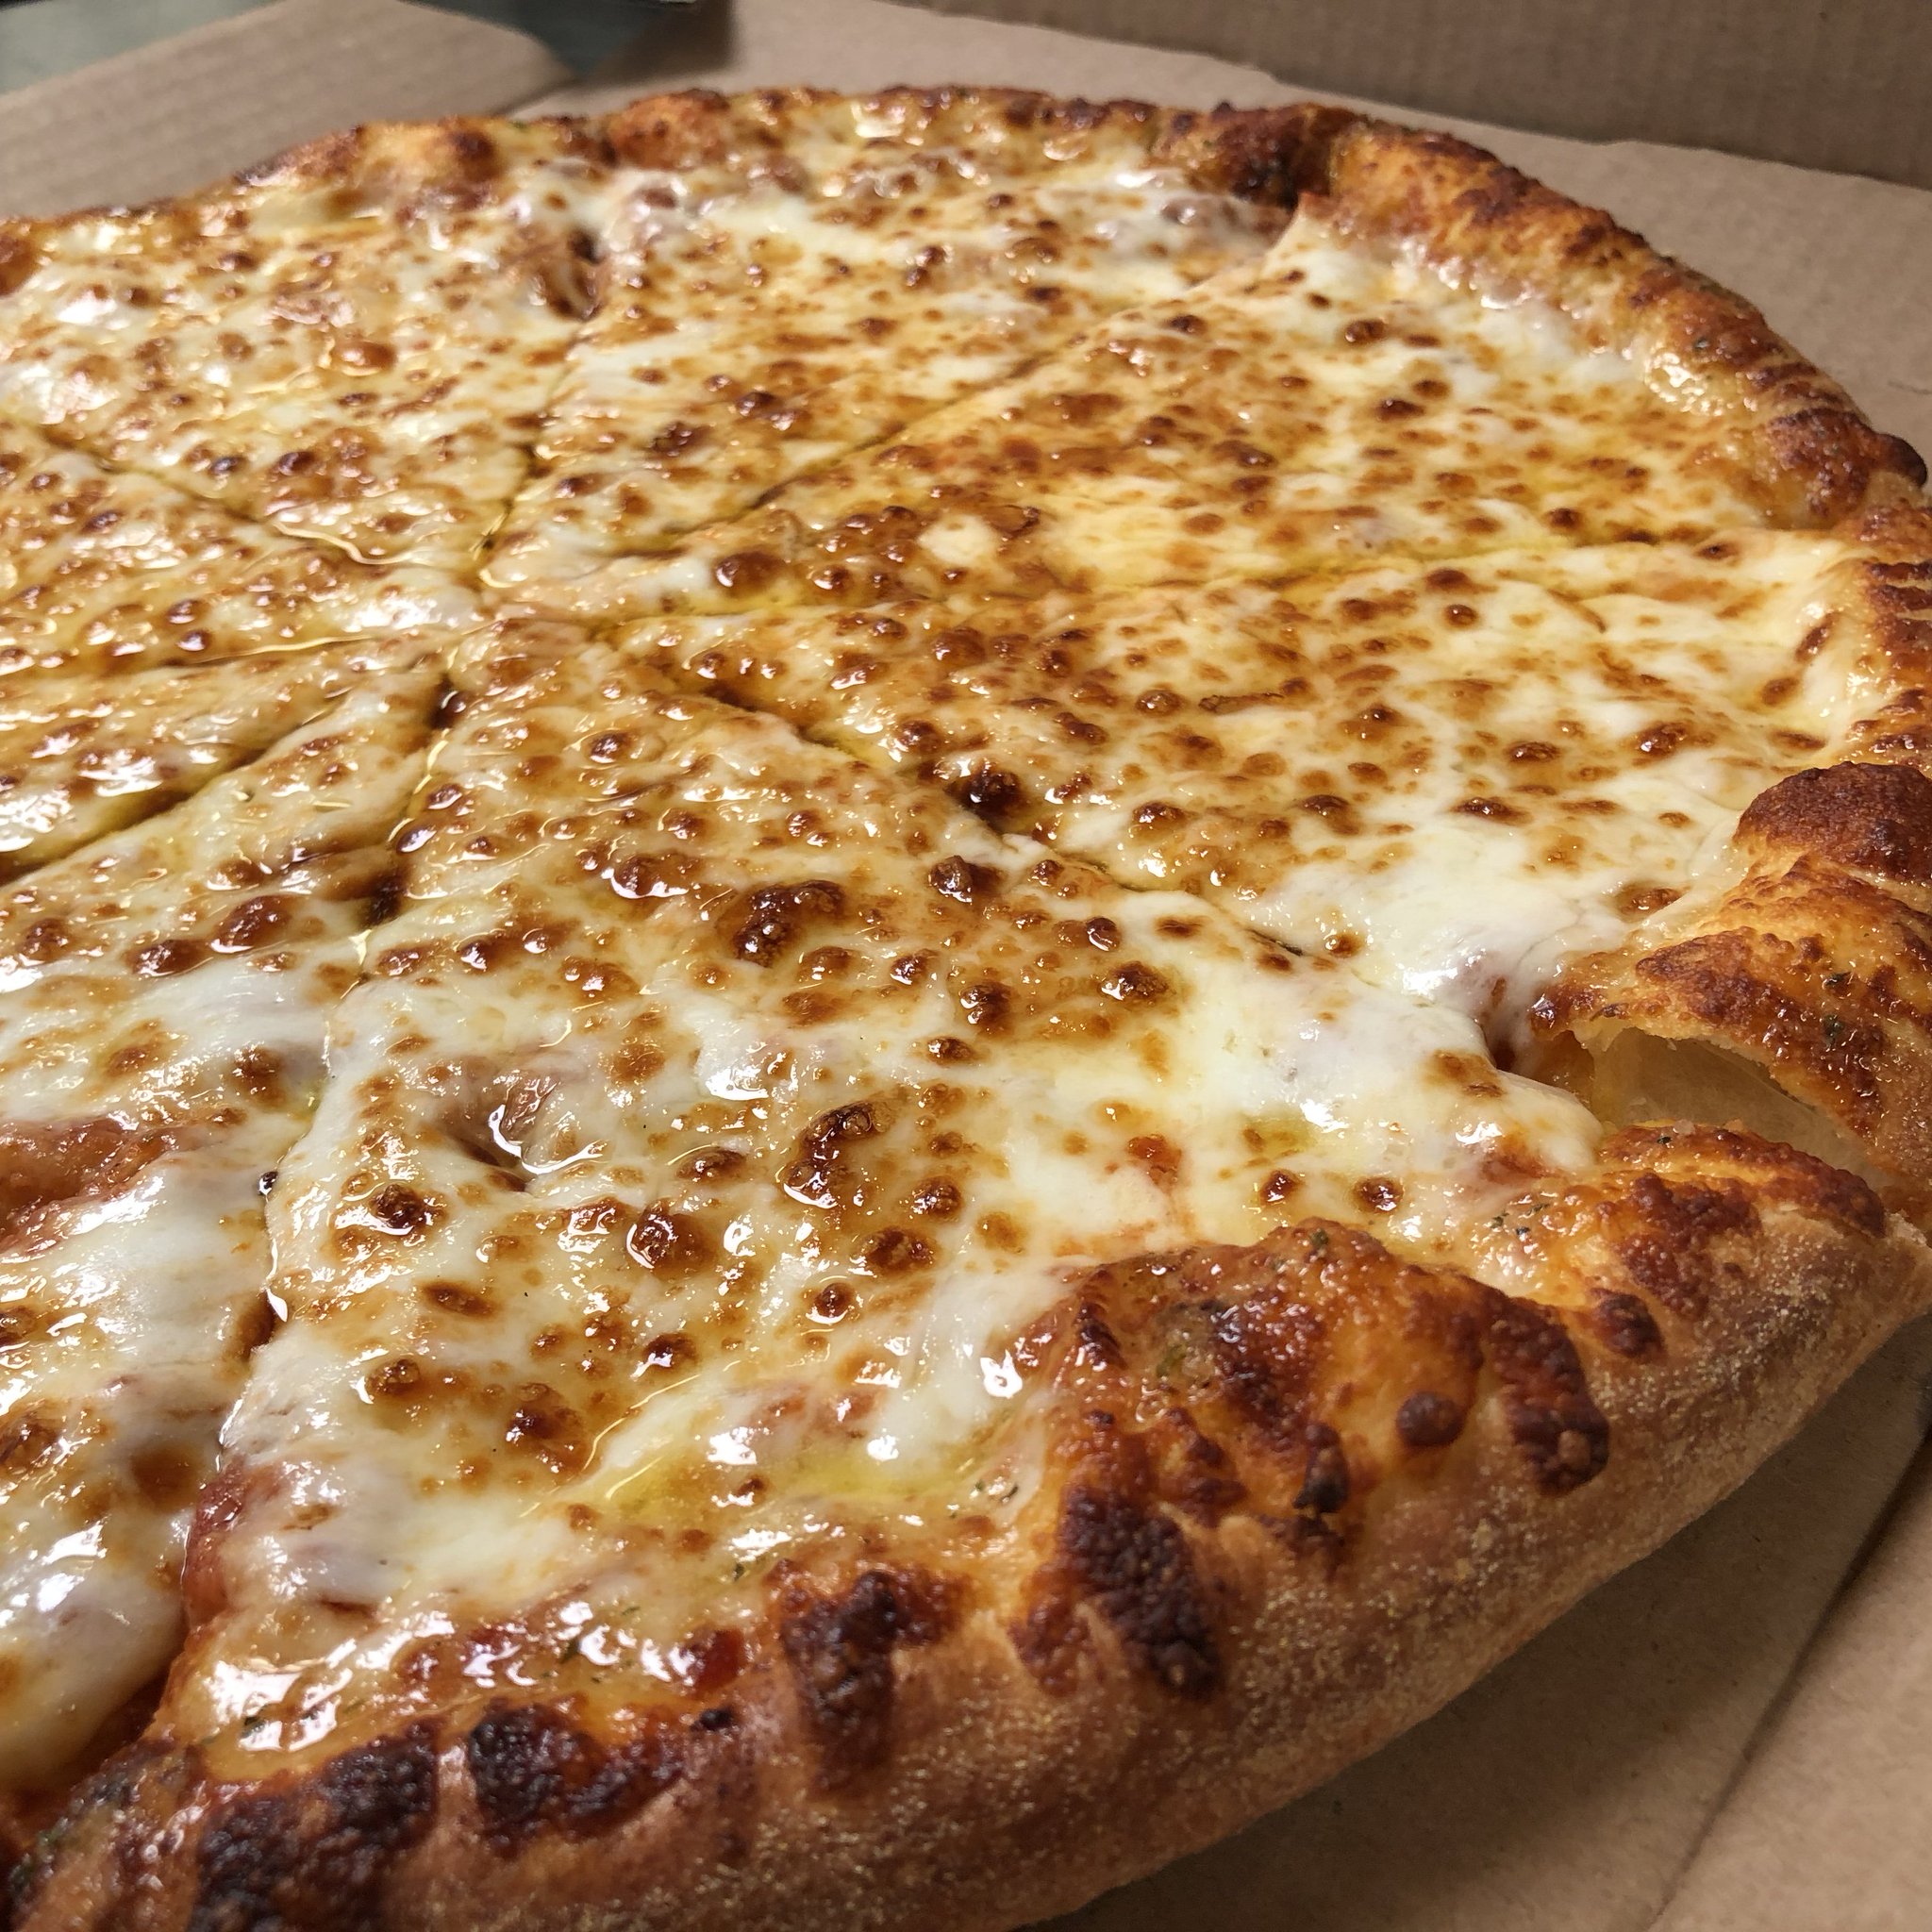 Domino's Pizza on Twitter: "Ordering this in 3, 2, 1...😋  https://t.co/uxIyYe3UW7" / Twitter